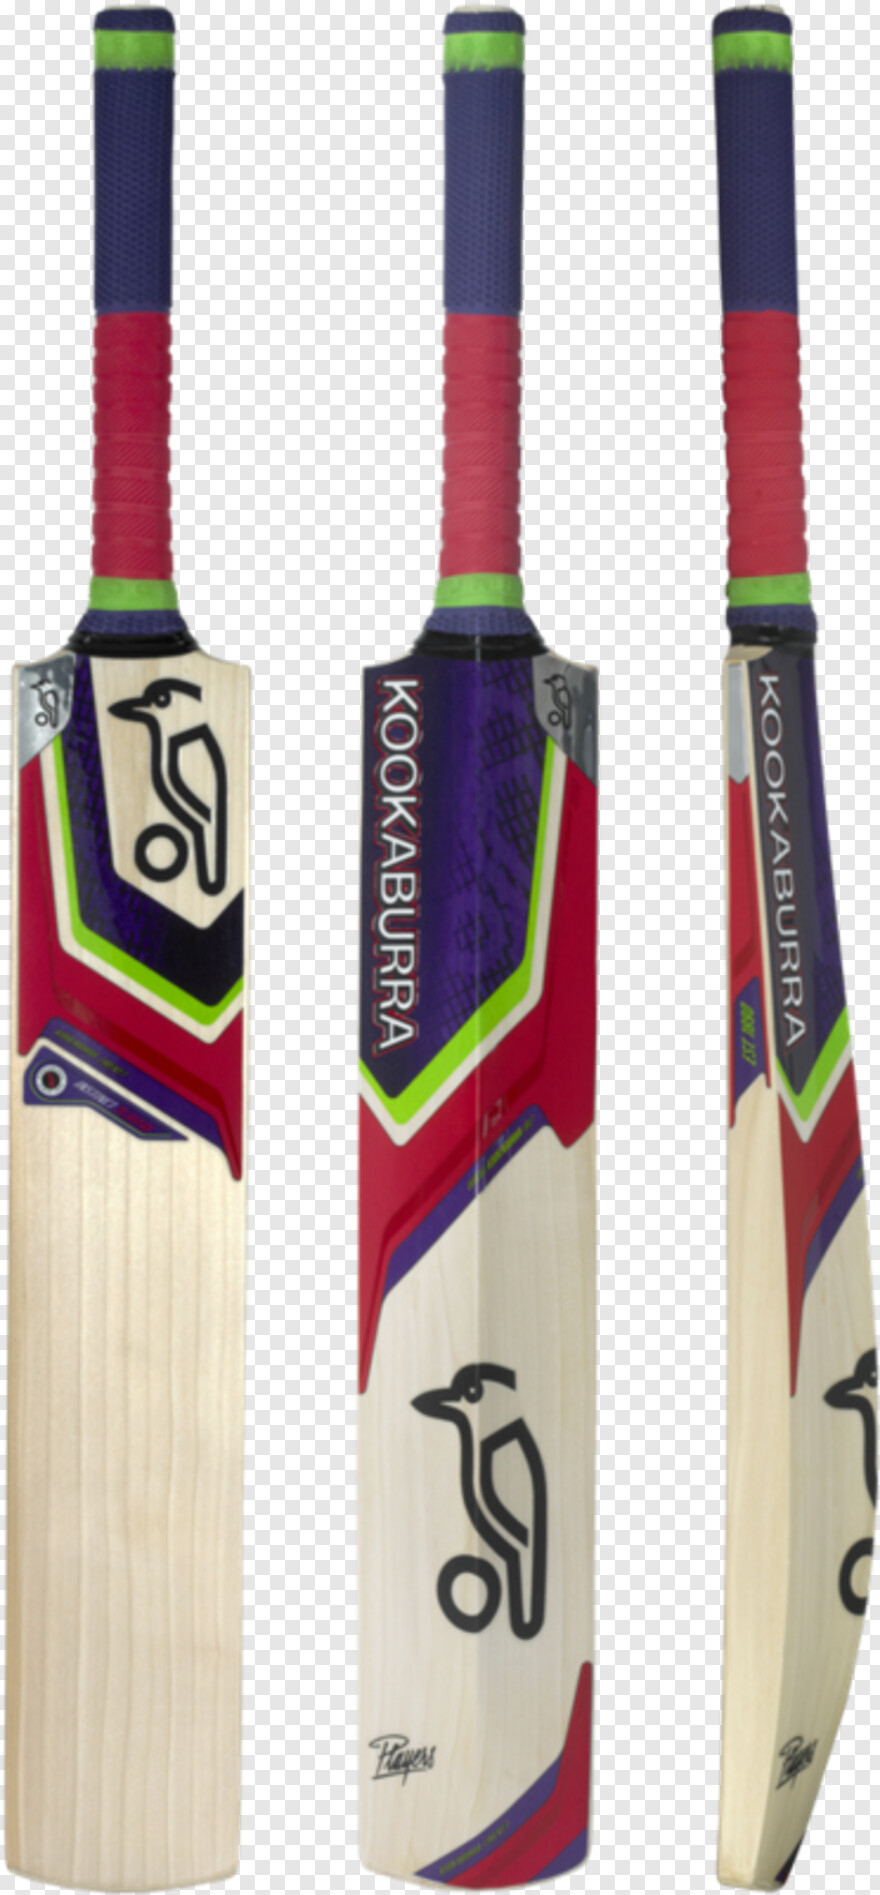  Cricket Images, Cricket Vector, Cricket Clipart, Cricket Cup, Cricket Bat And Ball, Cricket Kit